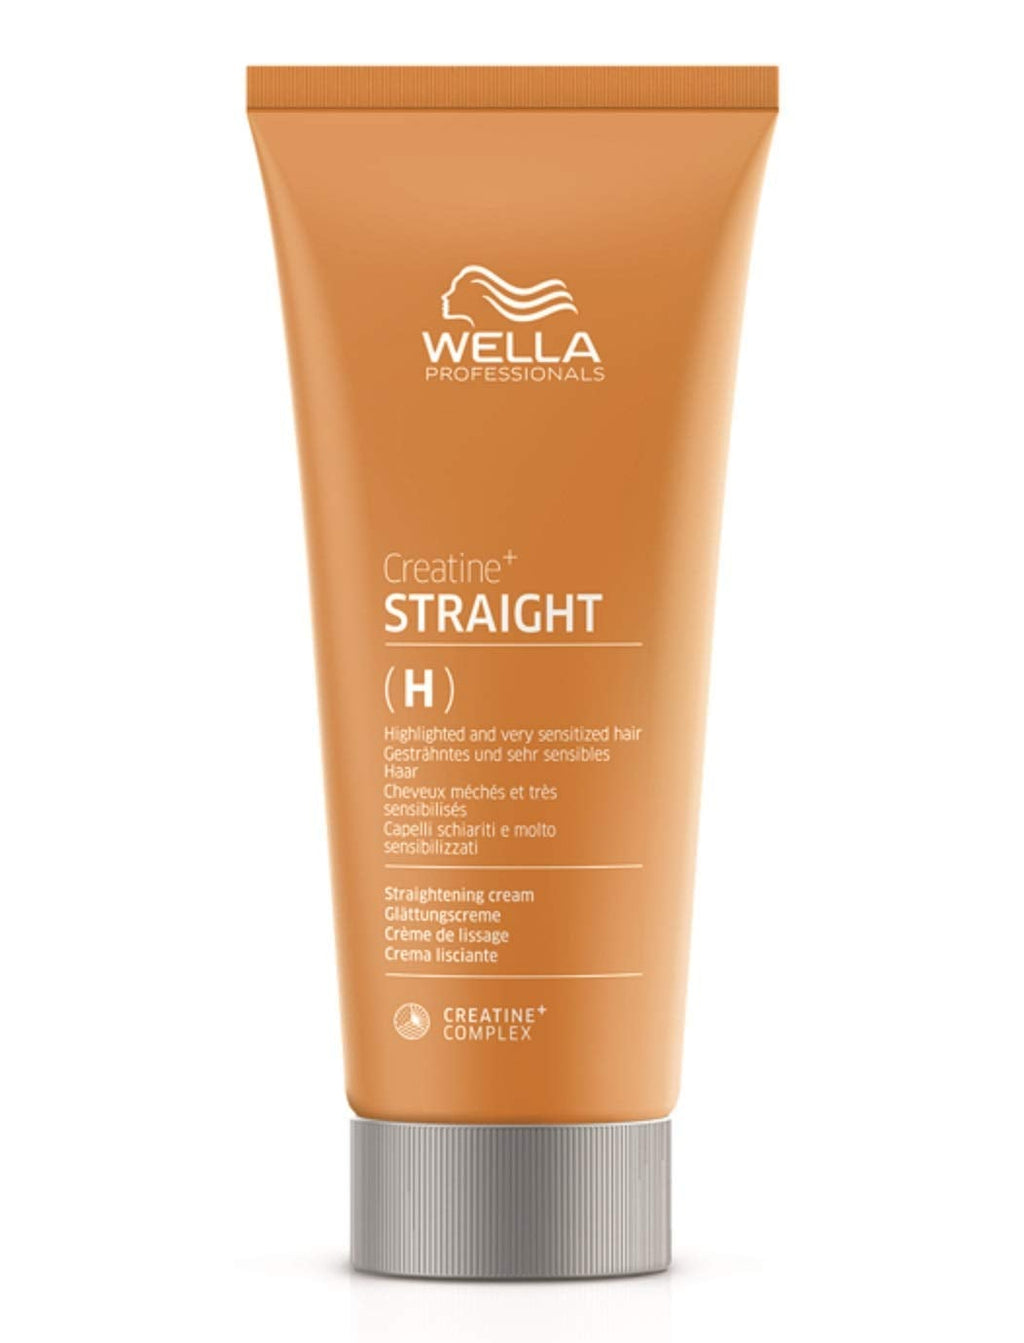 [Australia] - Wella Creatine+ (H) Straight Cream, 0.24 kg 